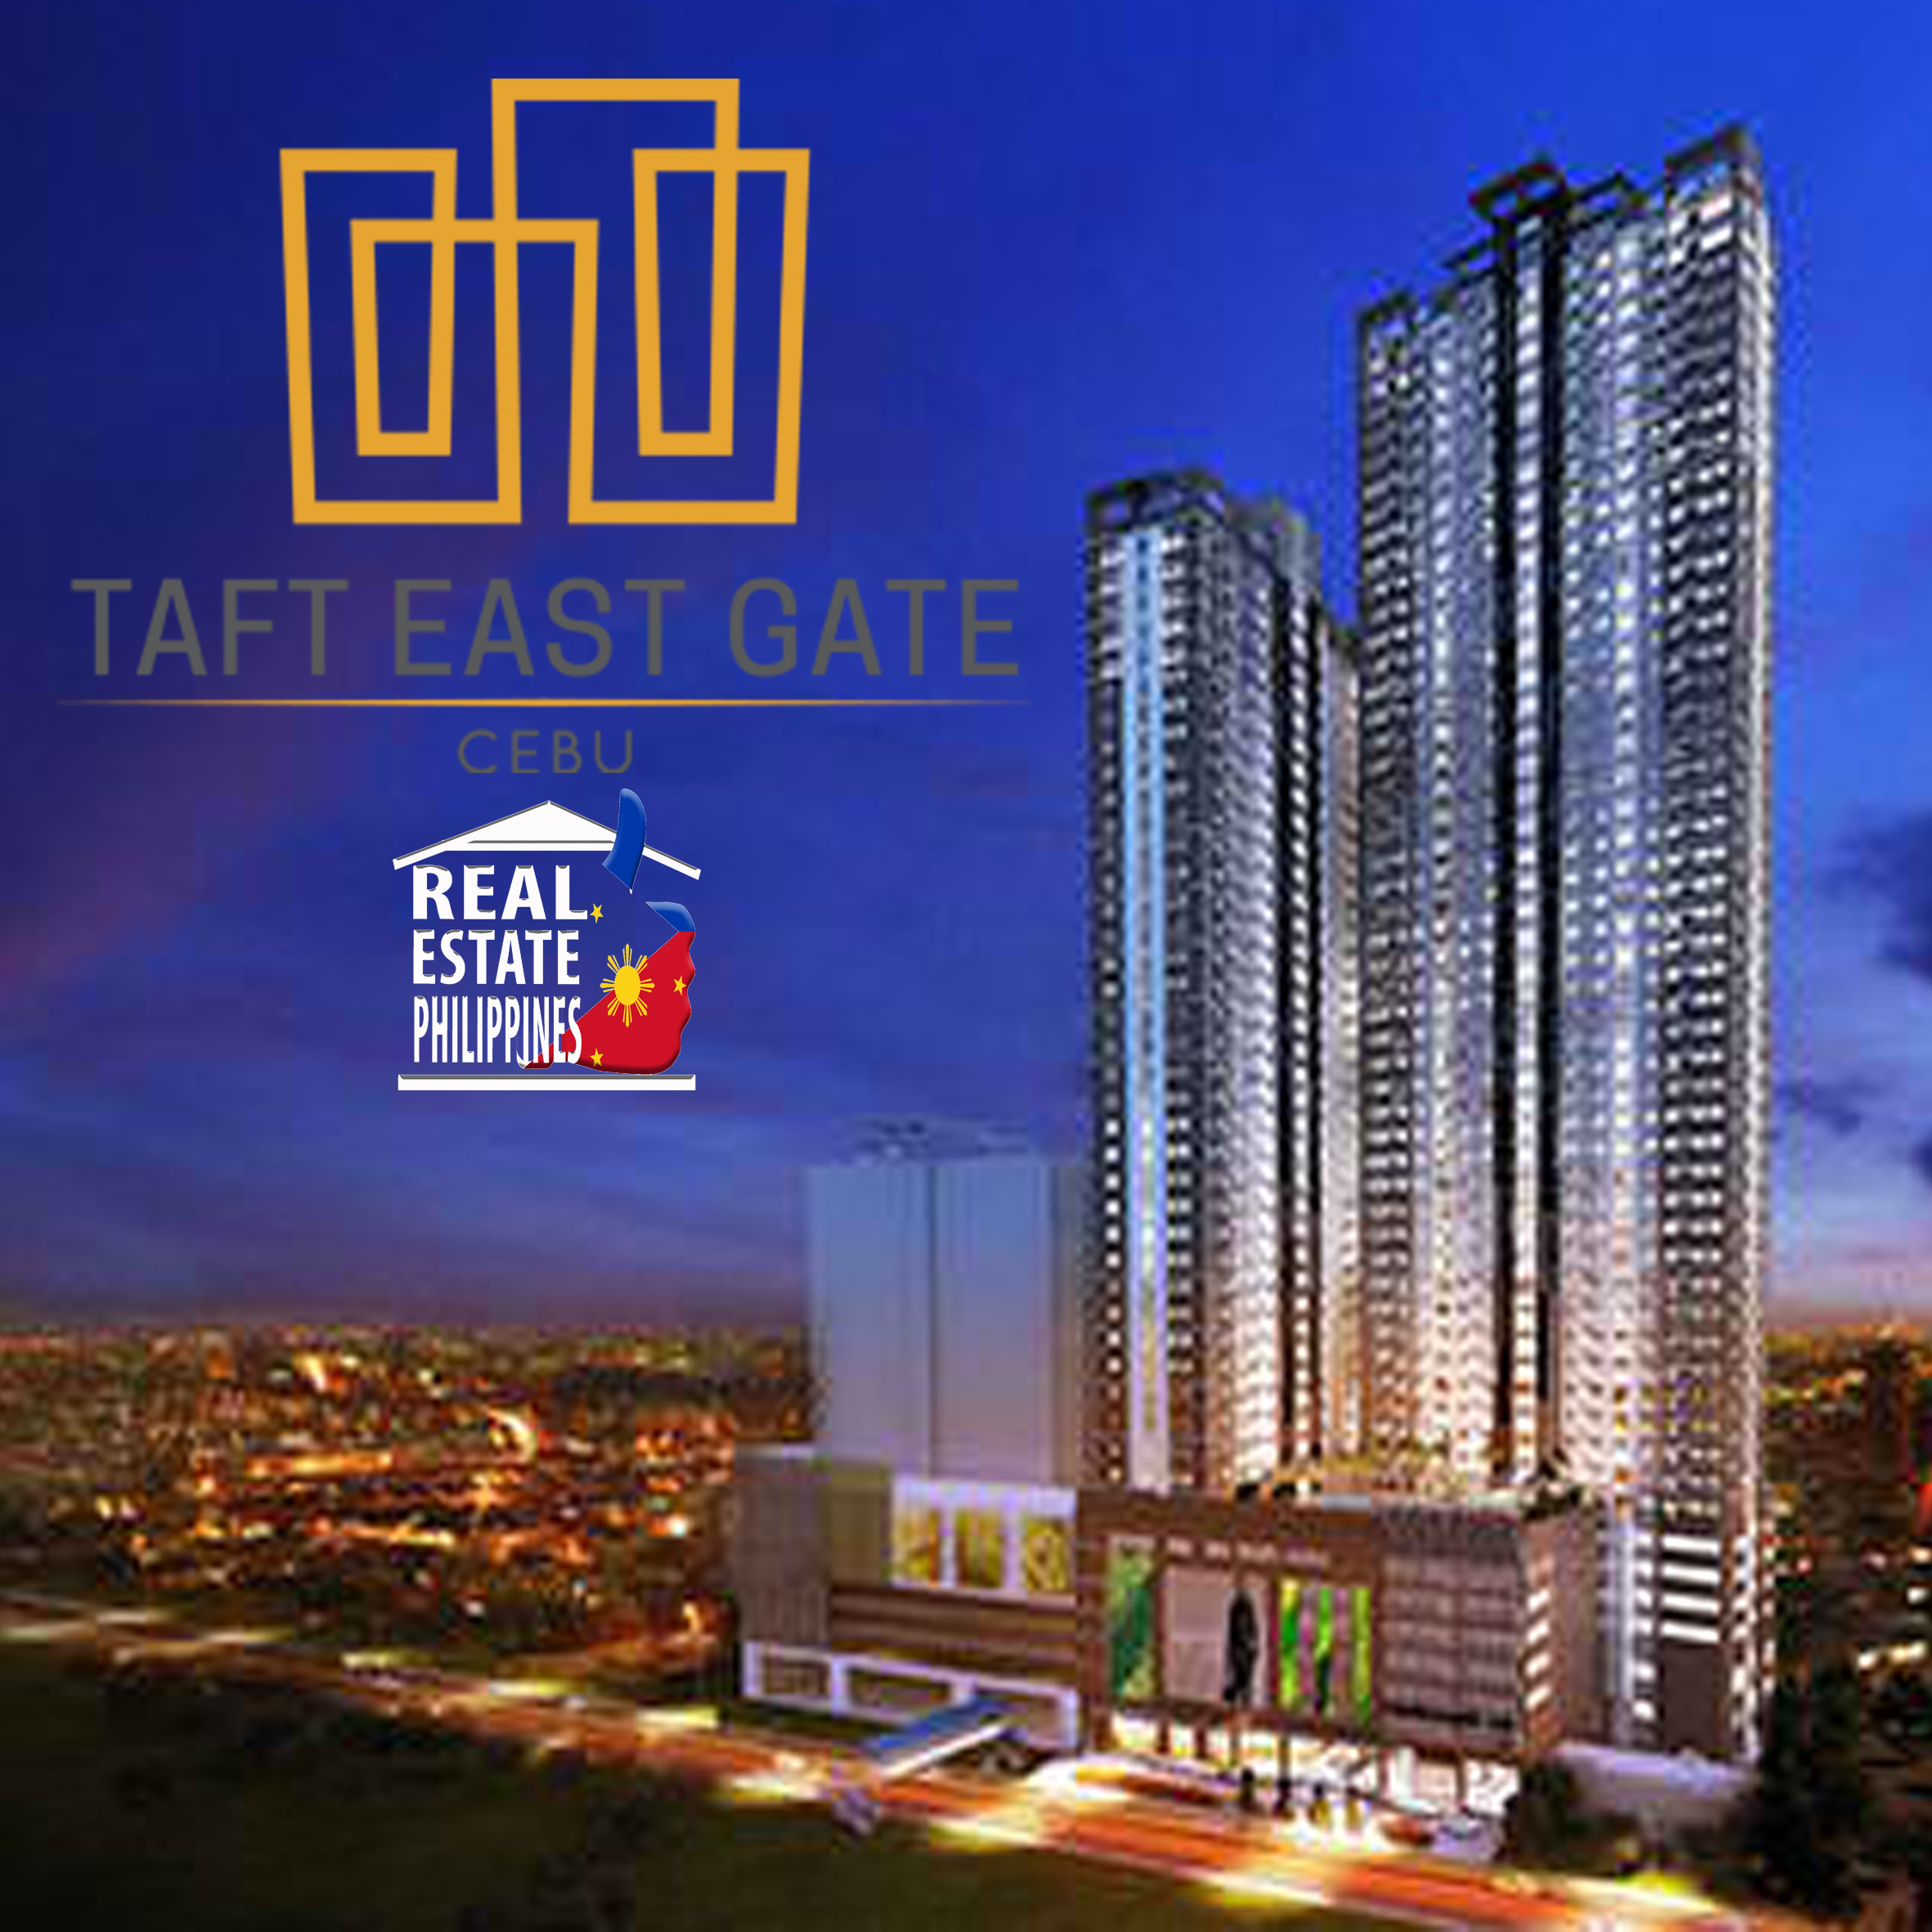 Taft East Gate Real Estate Philippines